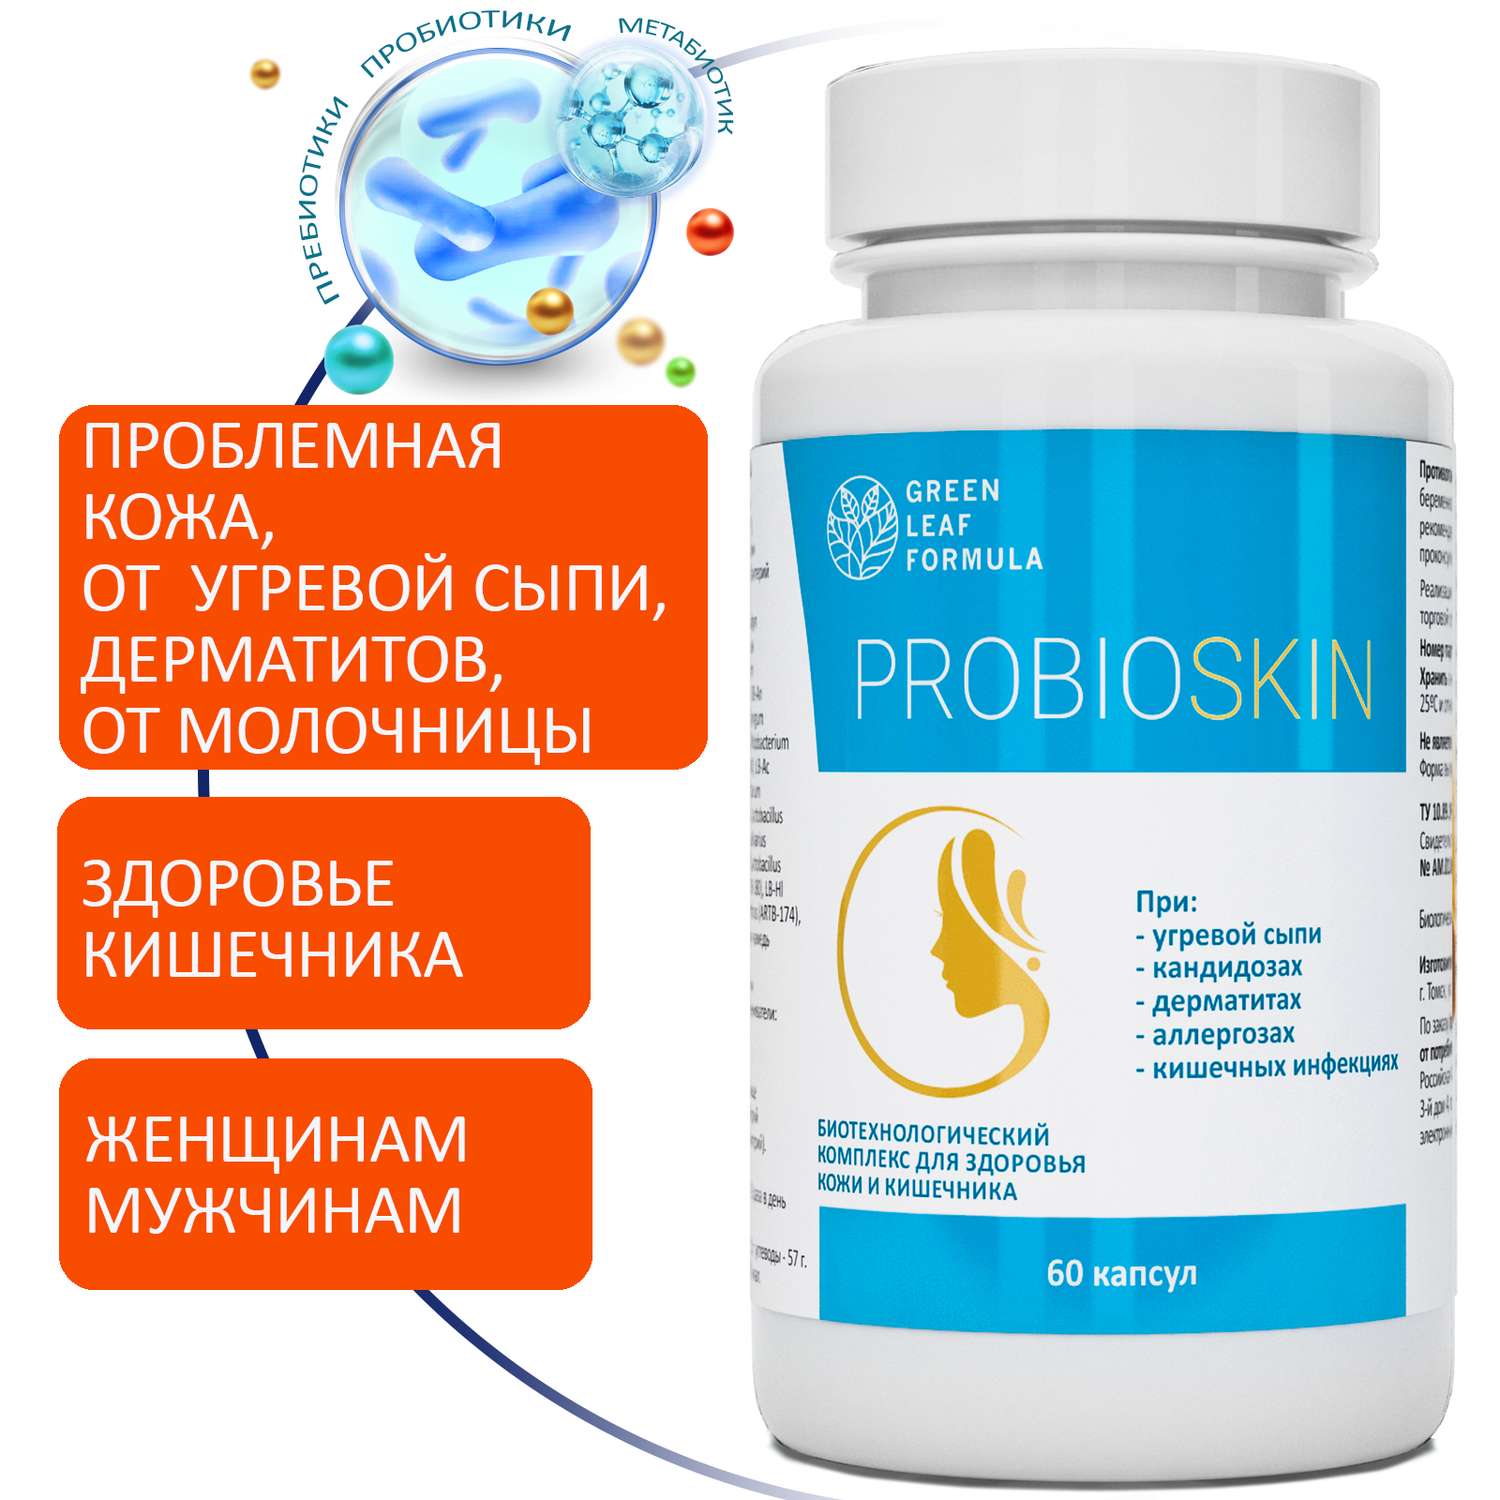 Пробиотик от акне Green Leaf Formula инулин пребиотик симбиотик для кишечника для взрослых от молочницы - фото 1